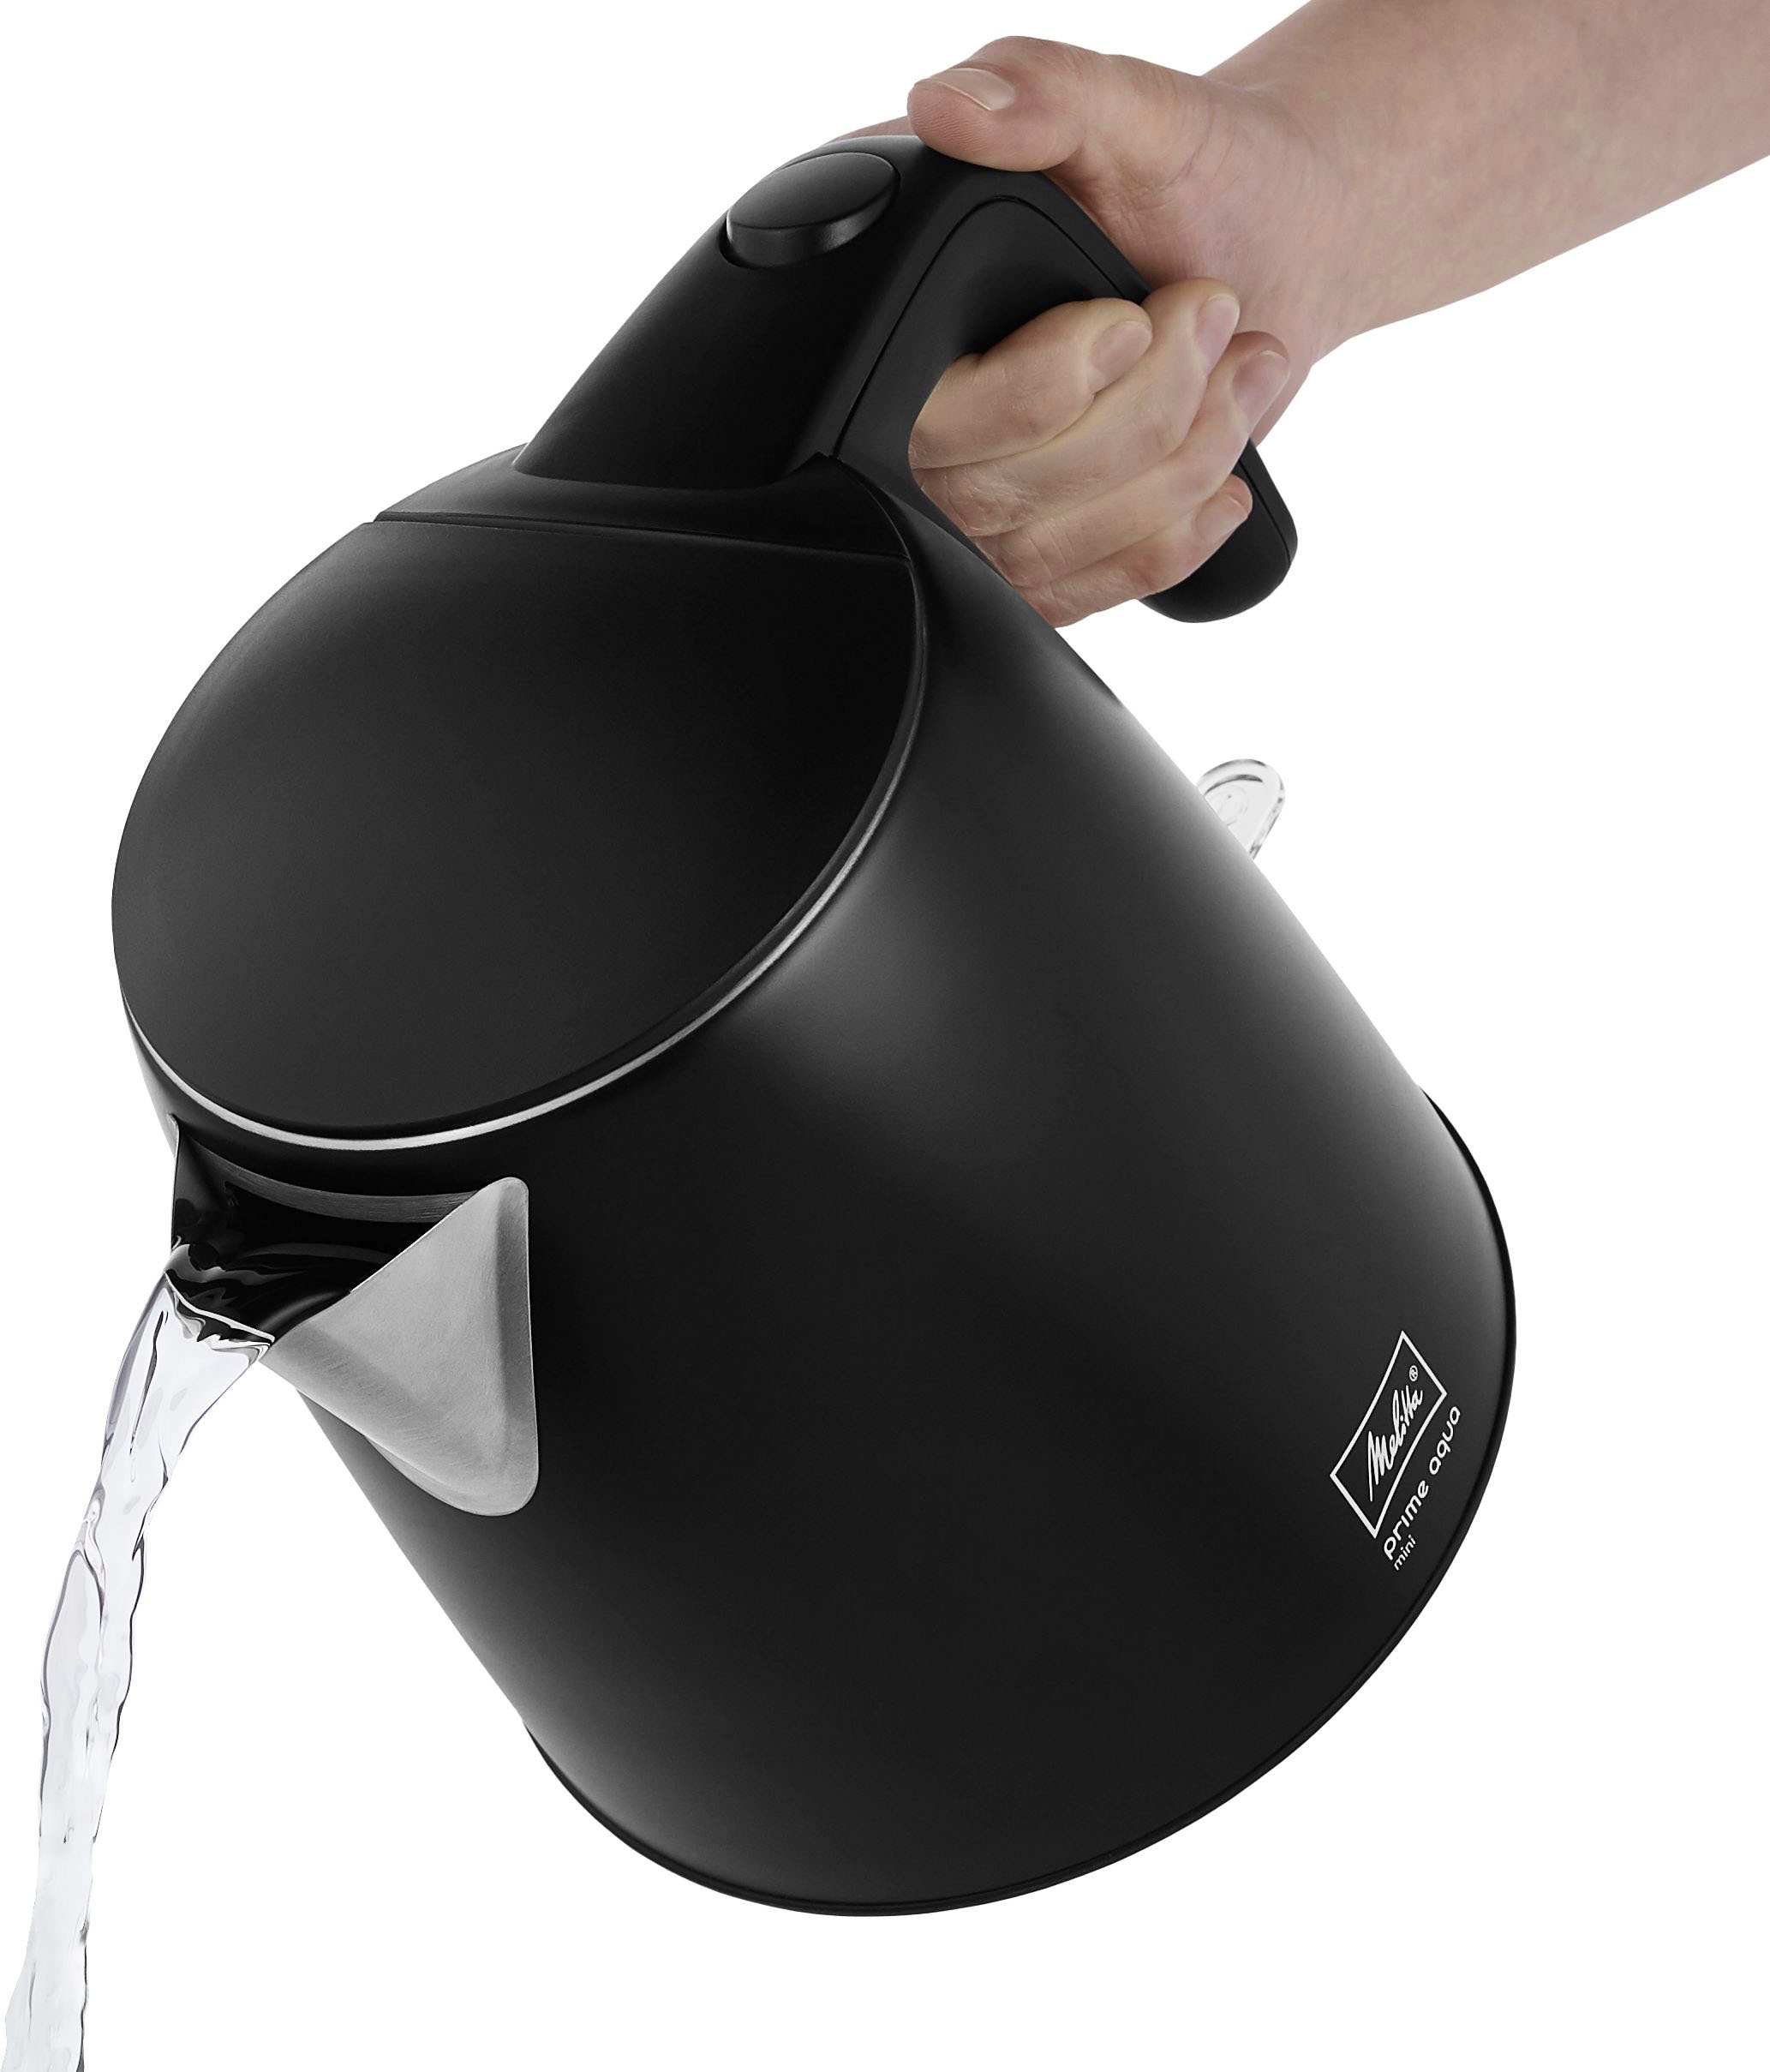 Melitta Wasserkocher »Prime Aqua Mini Black Edition«, 1,0 l, 2200 W